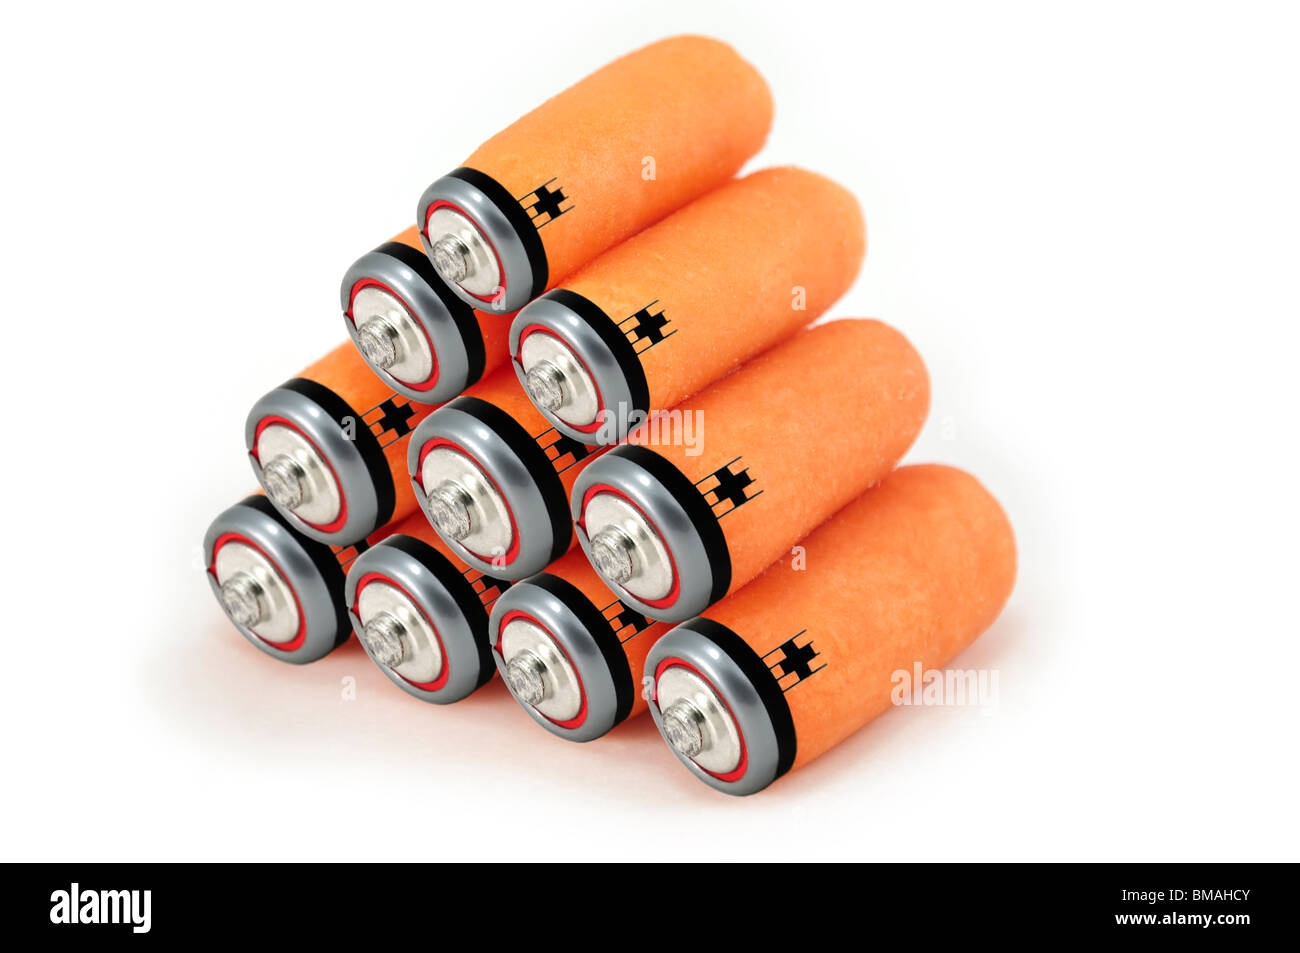 Concept photo about clean renewable energy batteries Stock Photo